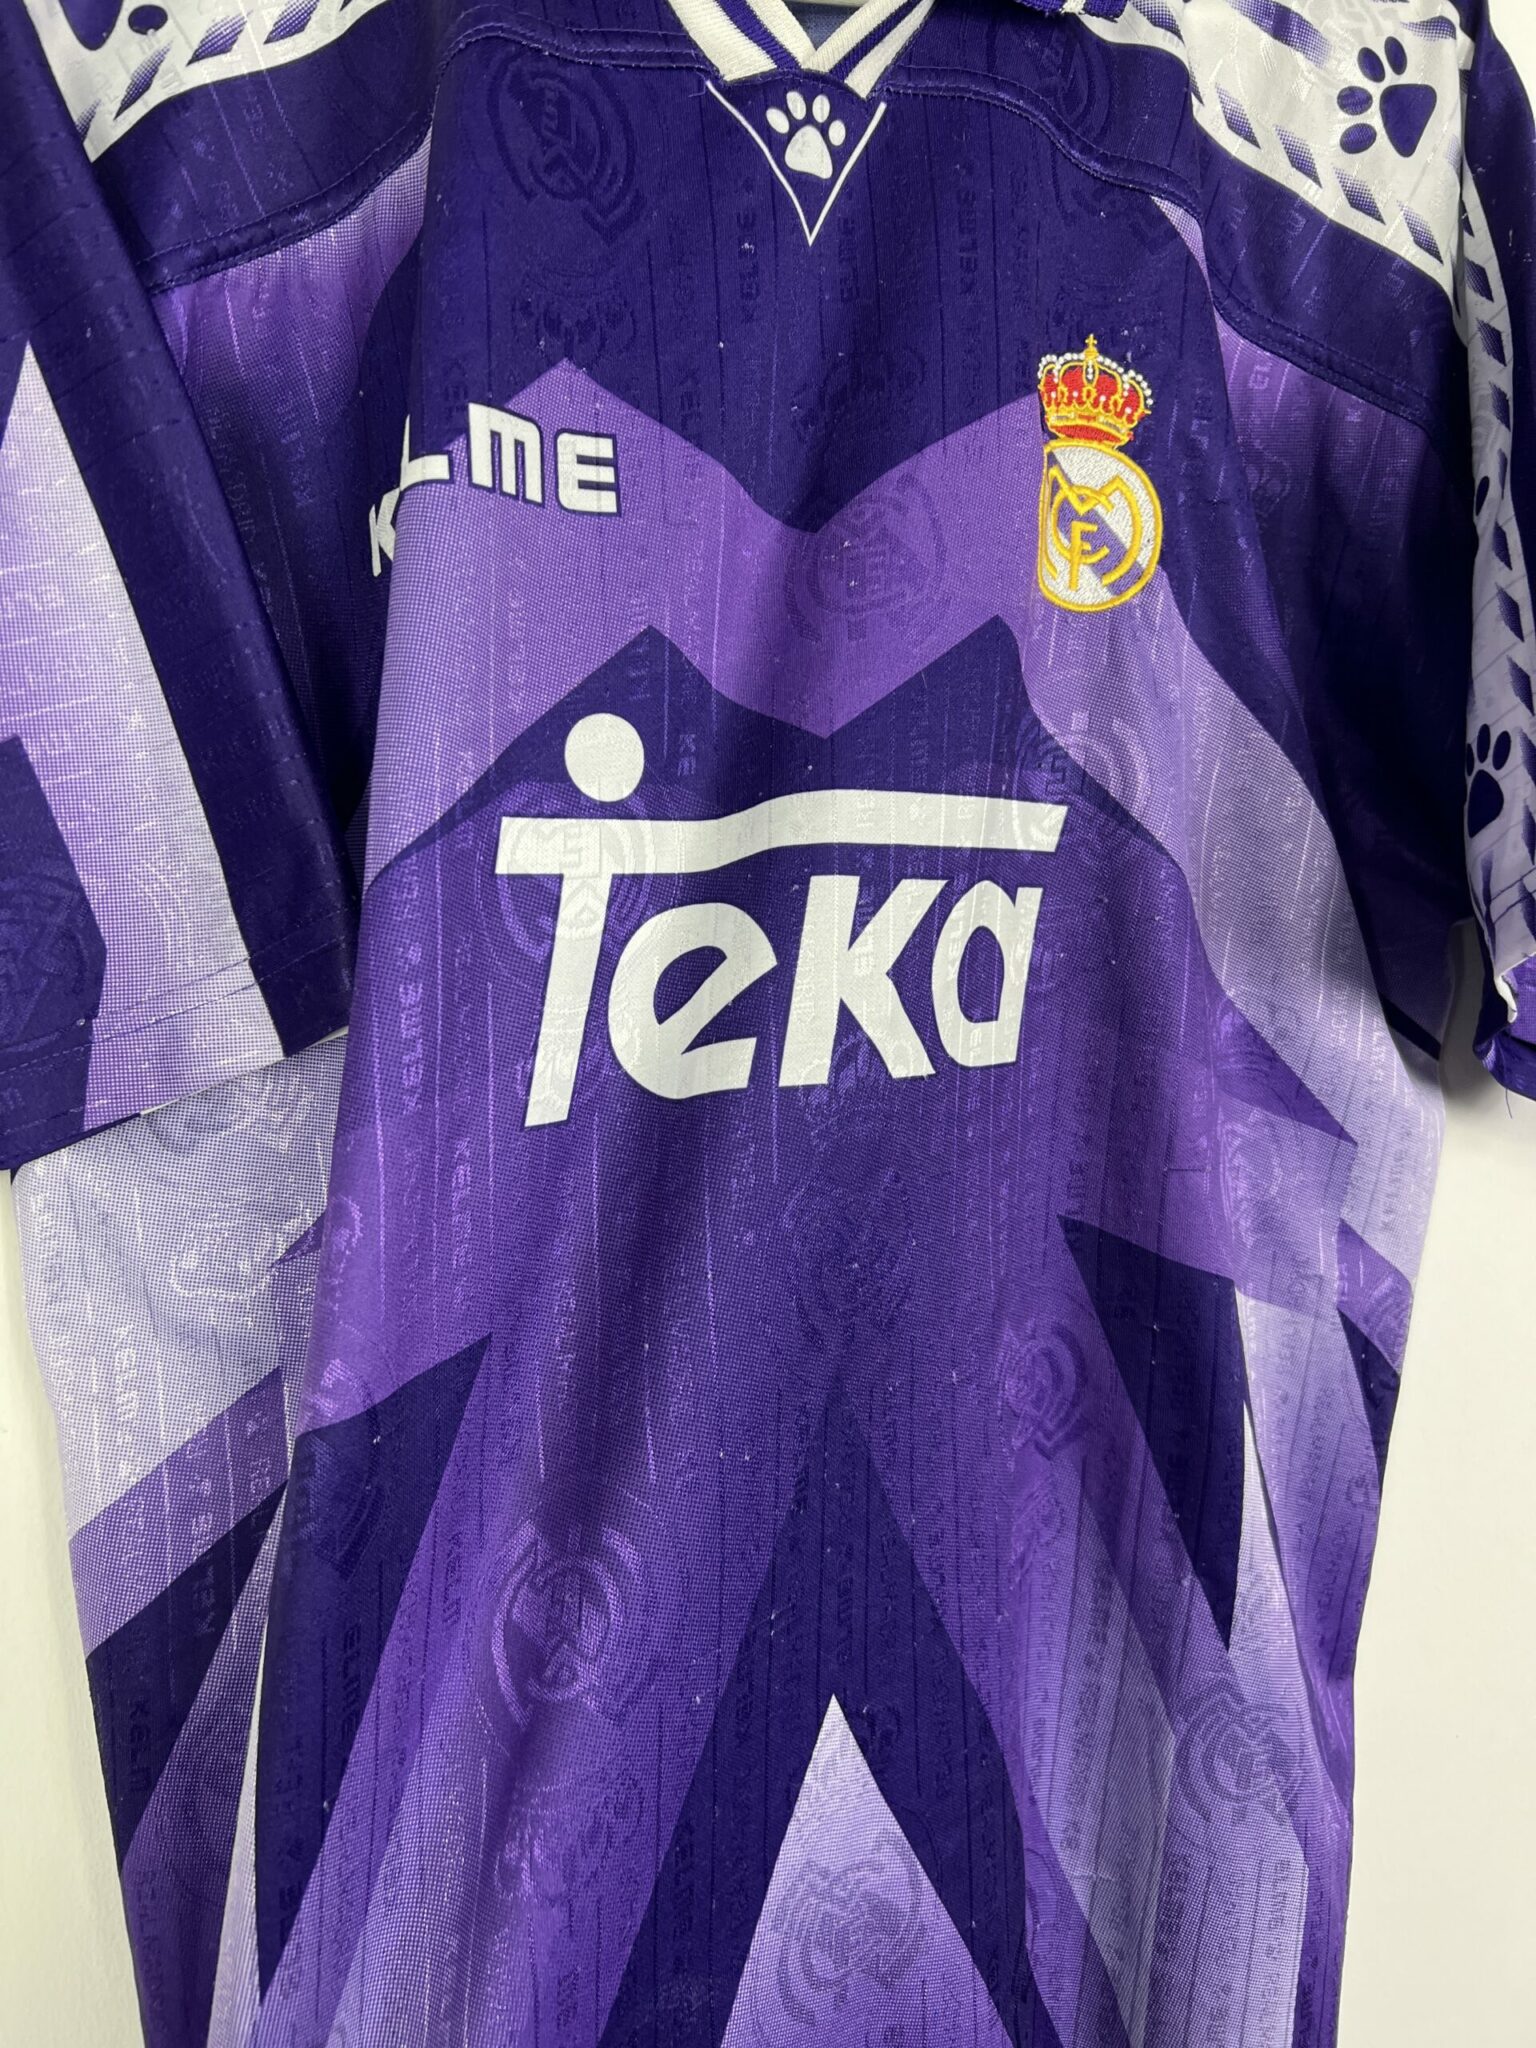 Real Madrid 1996-1997 Retro 3rd 'Teka' Jersey - Retro Sports Locker